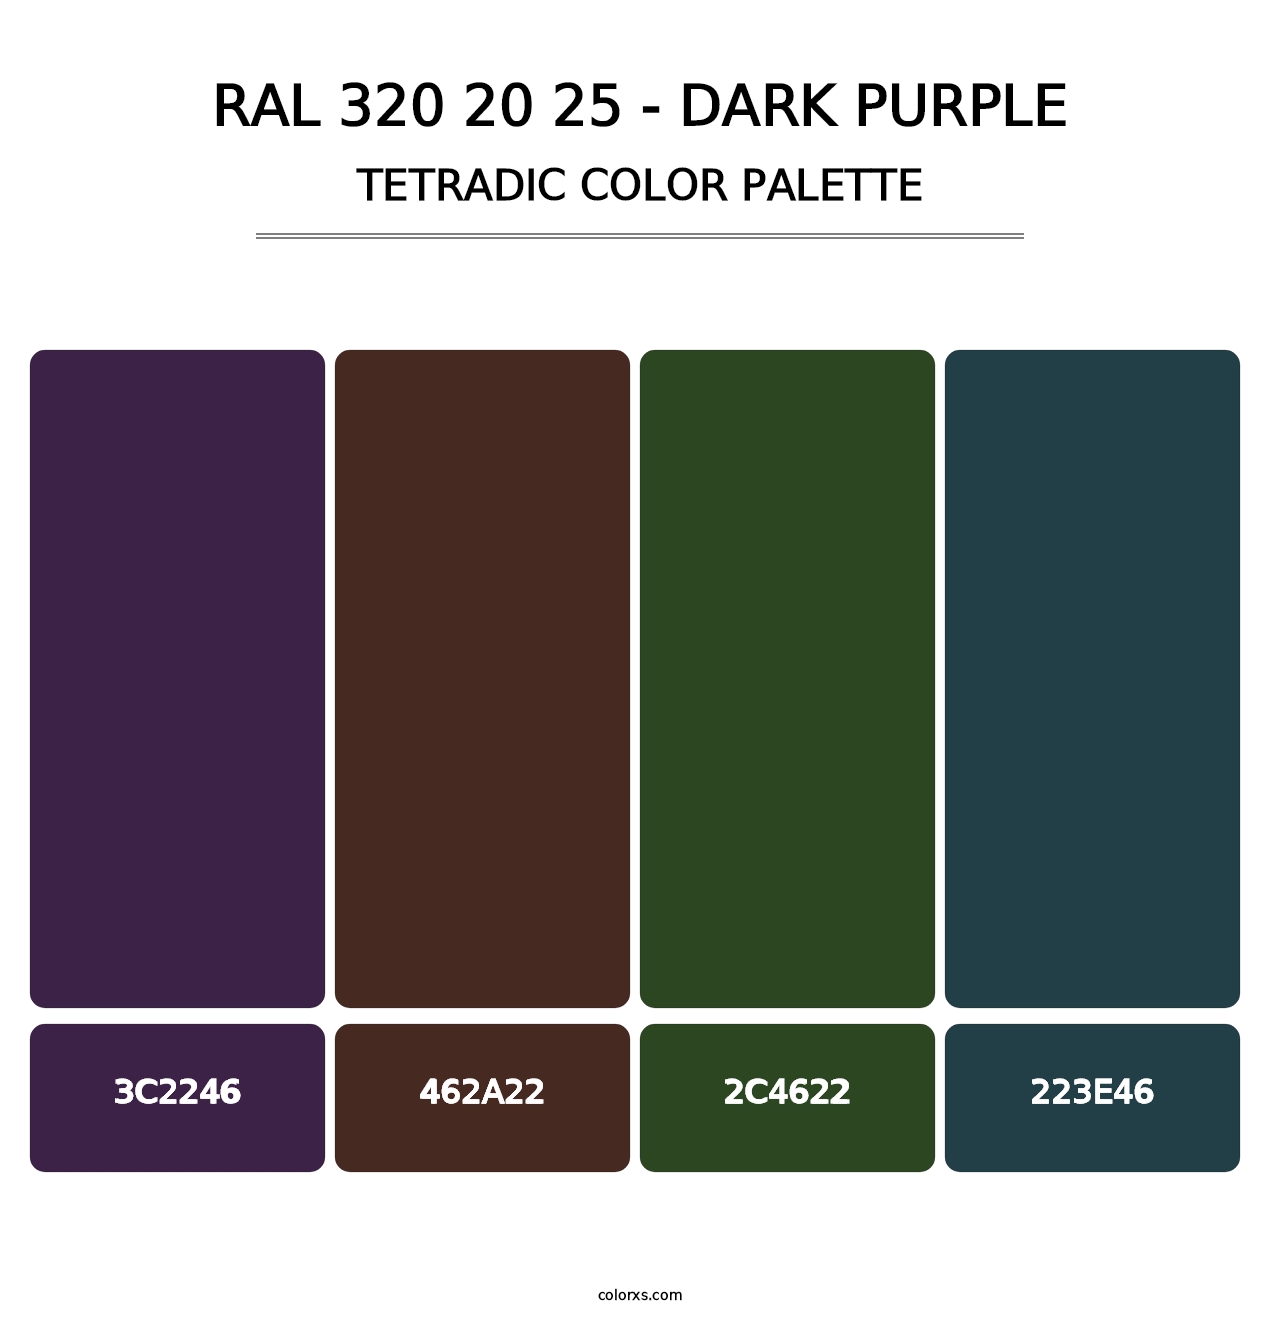 RAL 320 20 25 - Dark Purple - Tetradic Color Palette